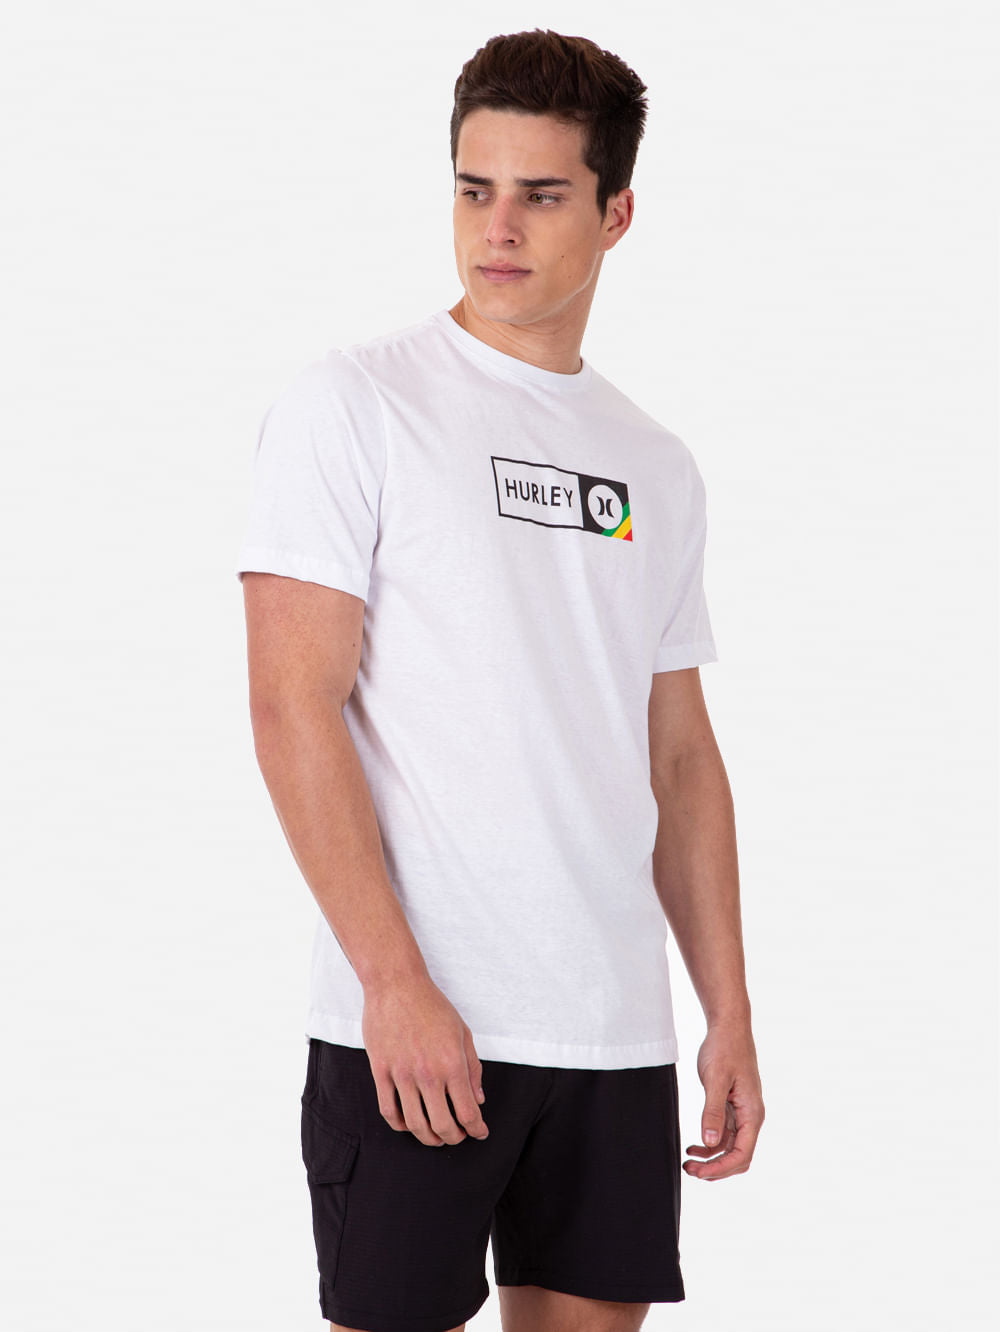 Camiseta Hurley Inbox Branca